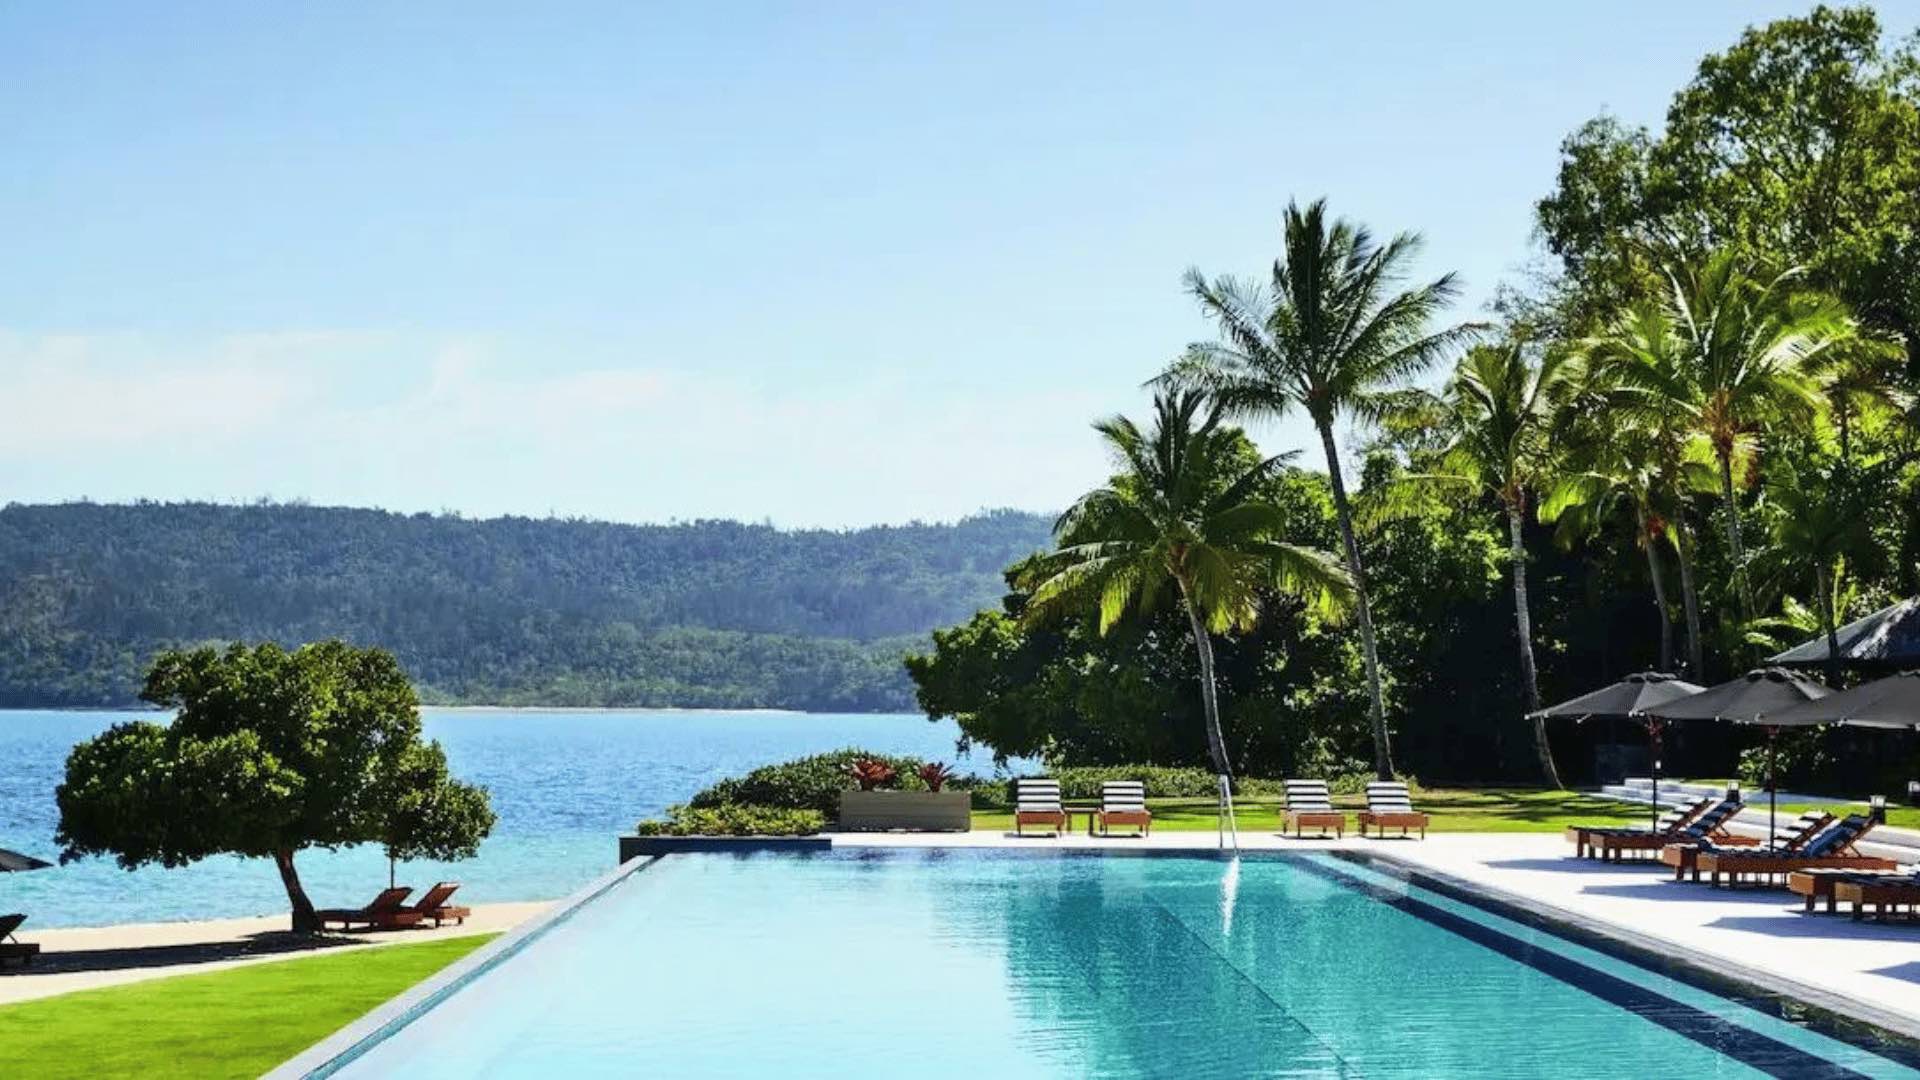 The infinity pool overlooking the ocean at qualia resort on Hamilton Island.